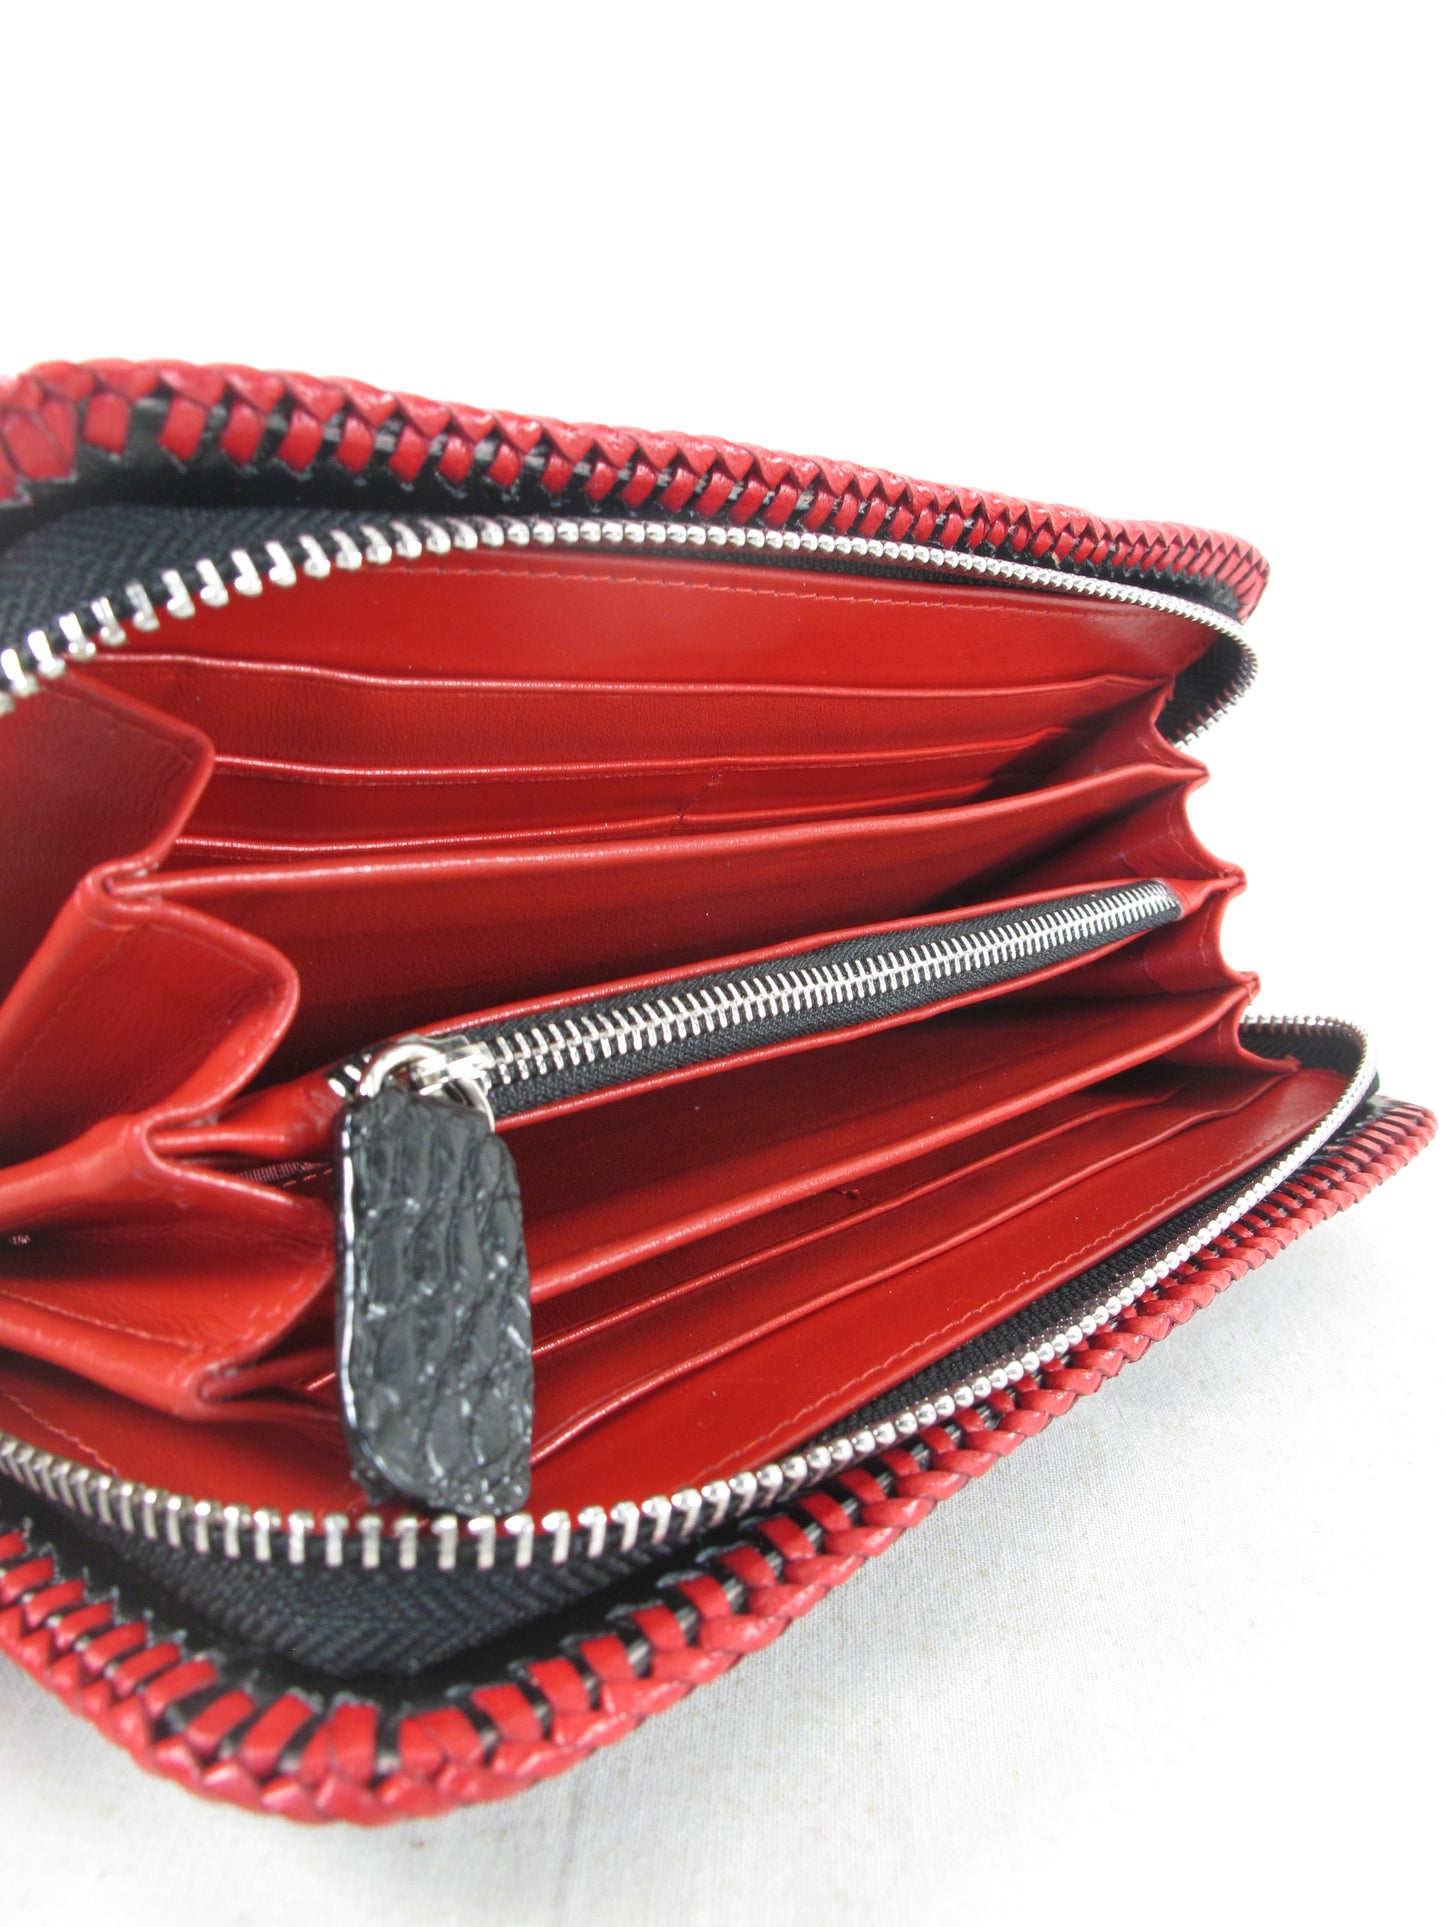 Genuine Crocodile Hornback Skin Leather Zip Around Handmade Clutch Wallet Purse with Red Trim